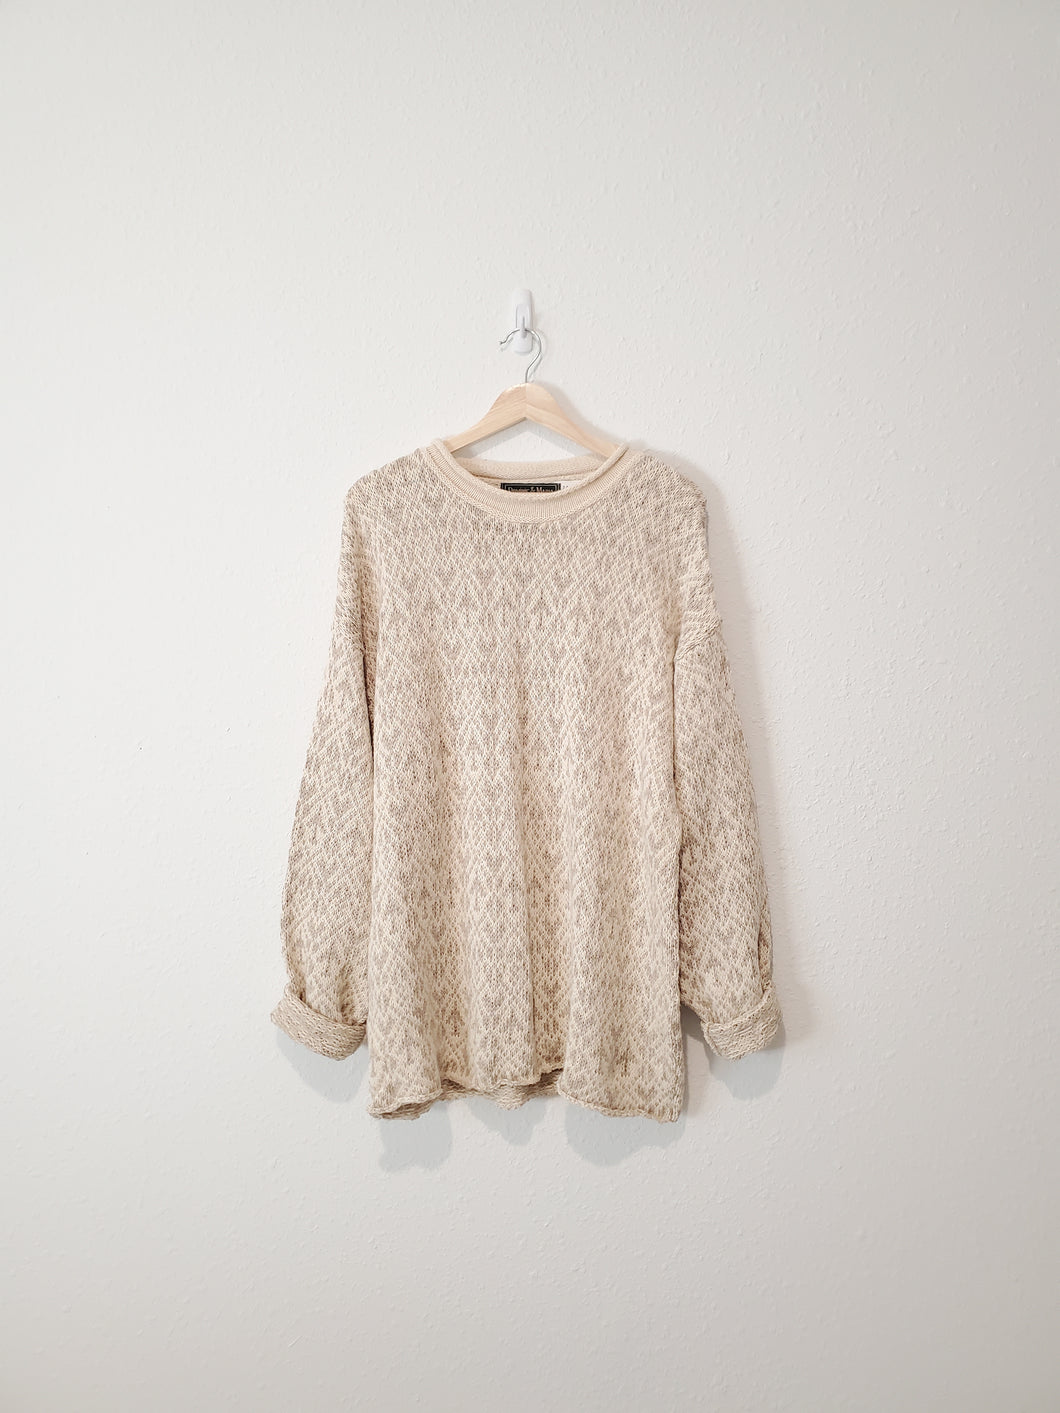 Vintage Neutral Sweater (L)